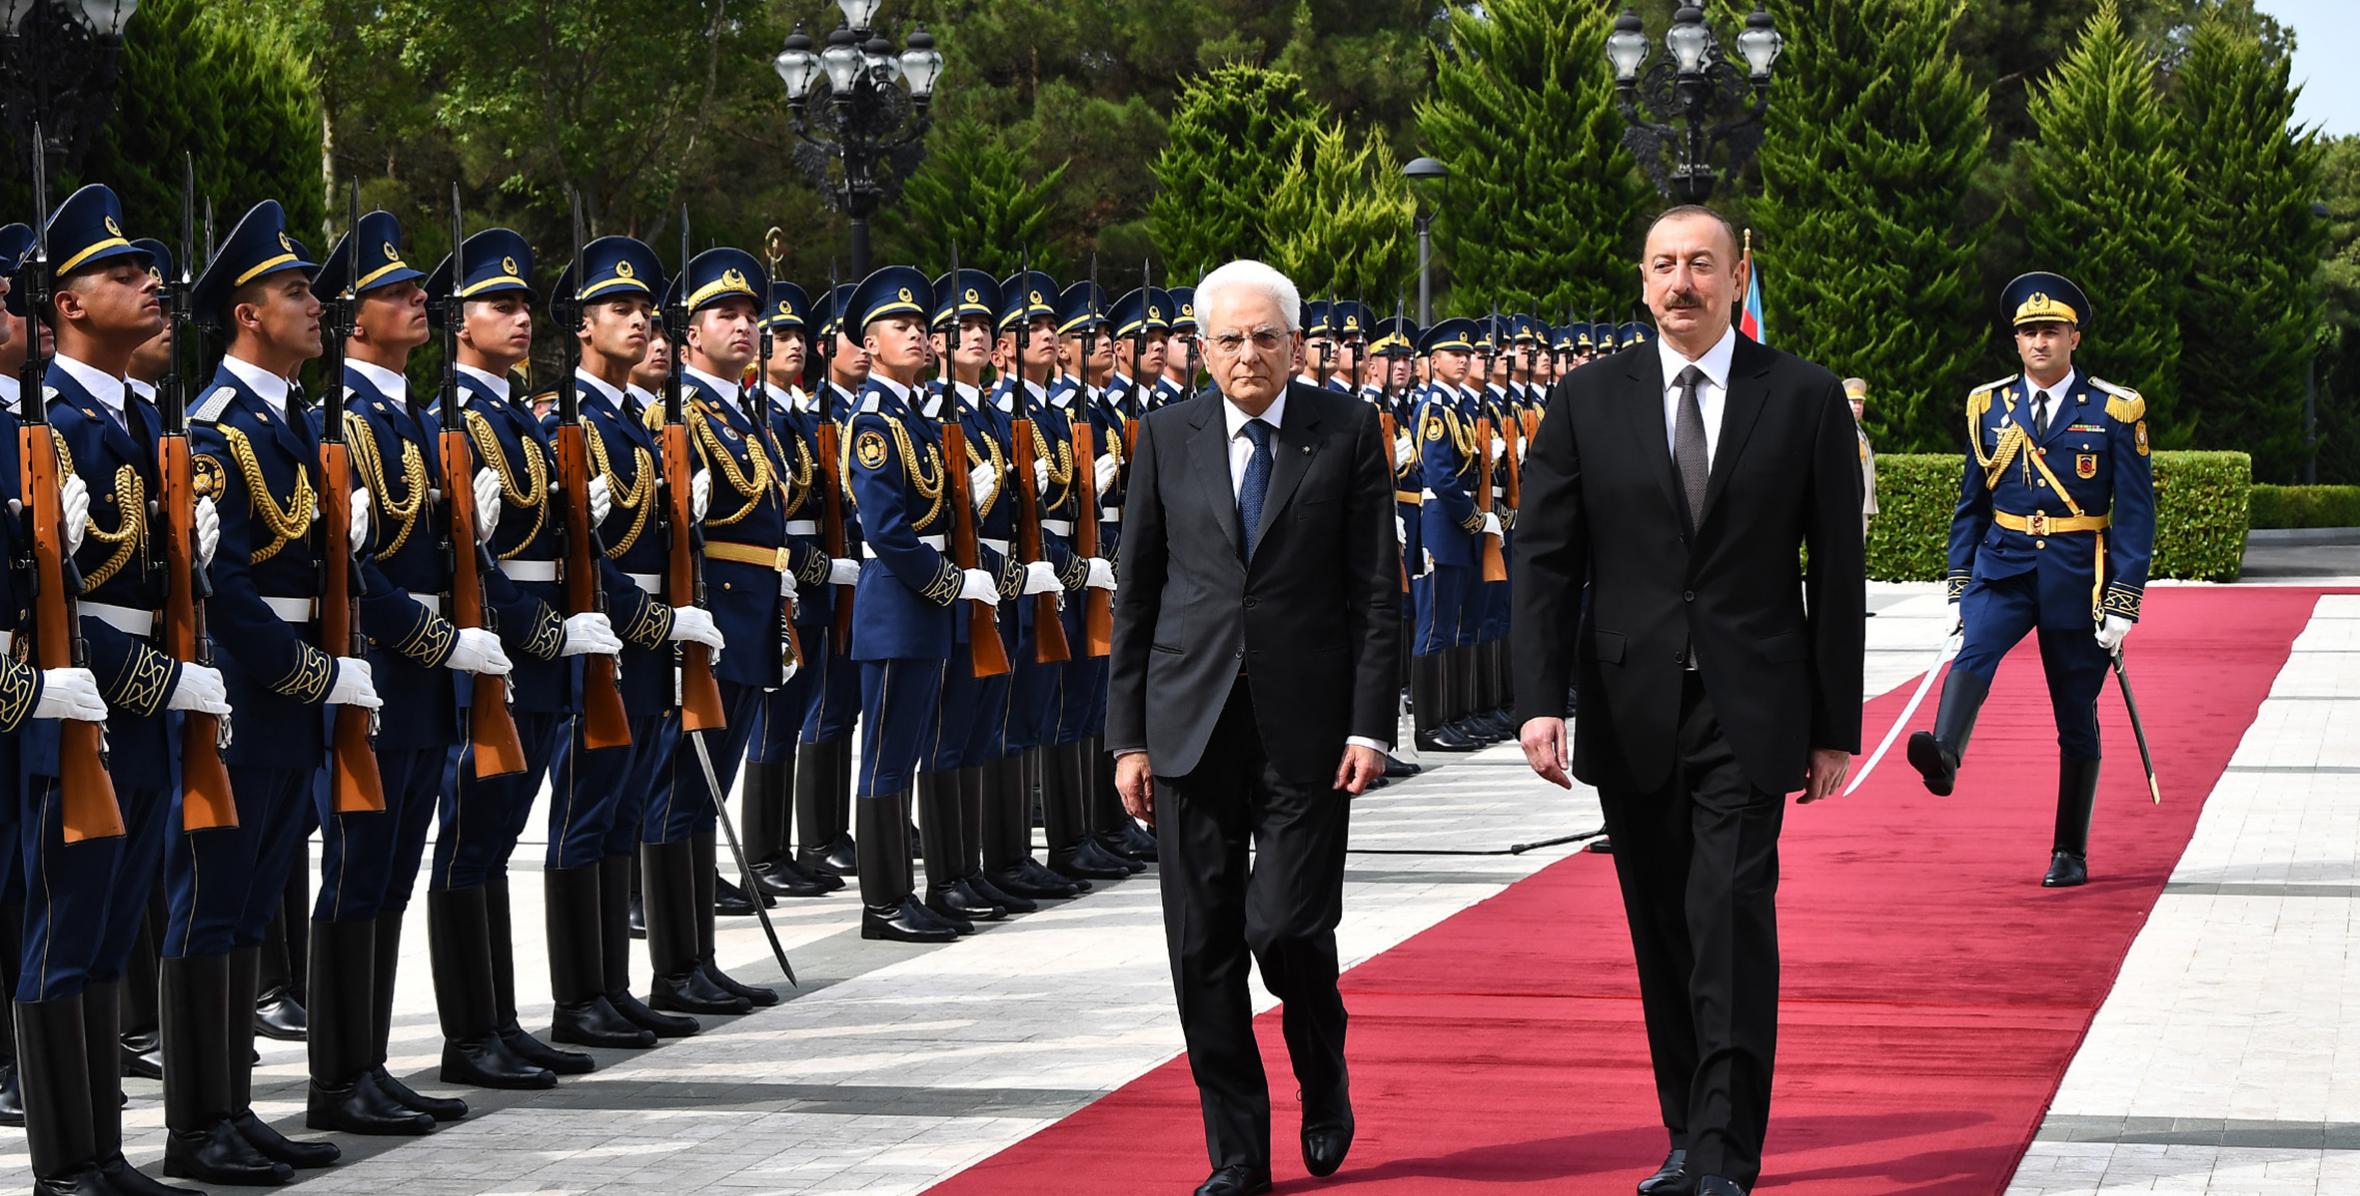 Official welcome ceremony was held for Italian President Sergio Mattarella